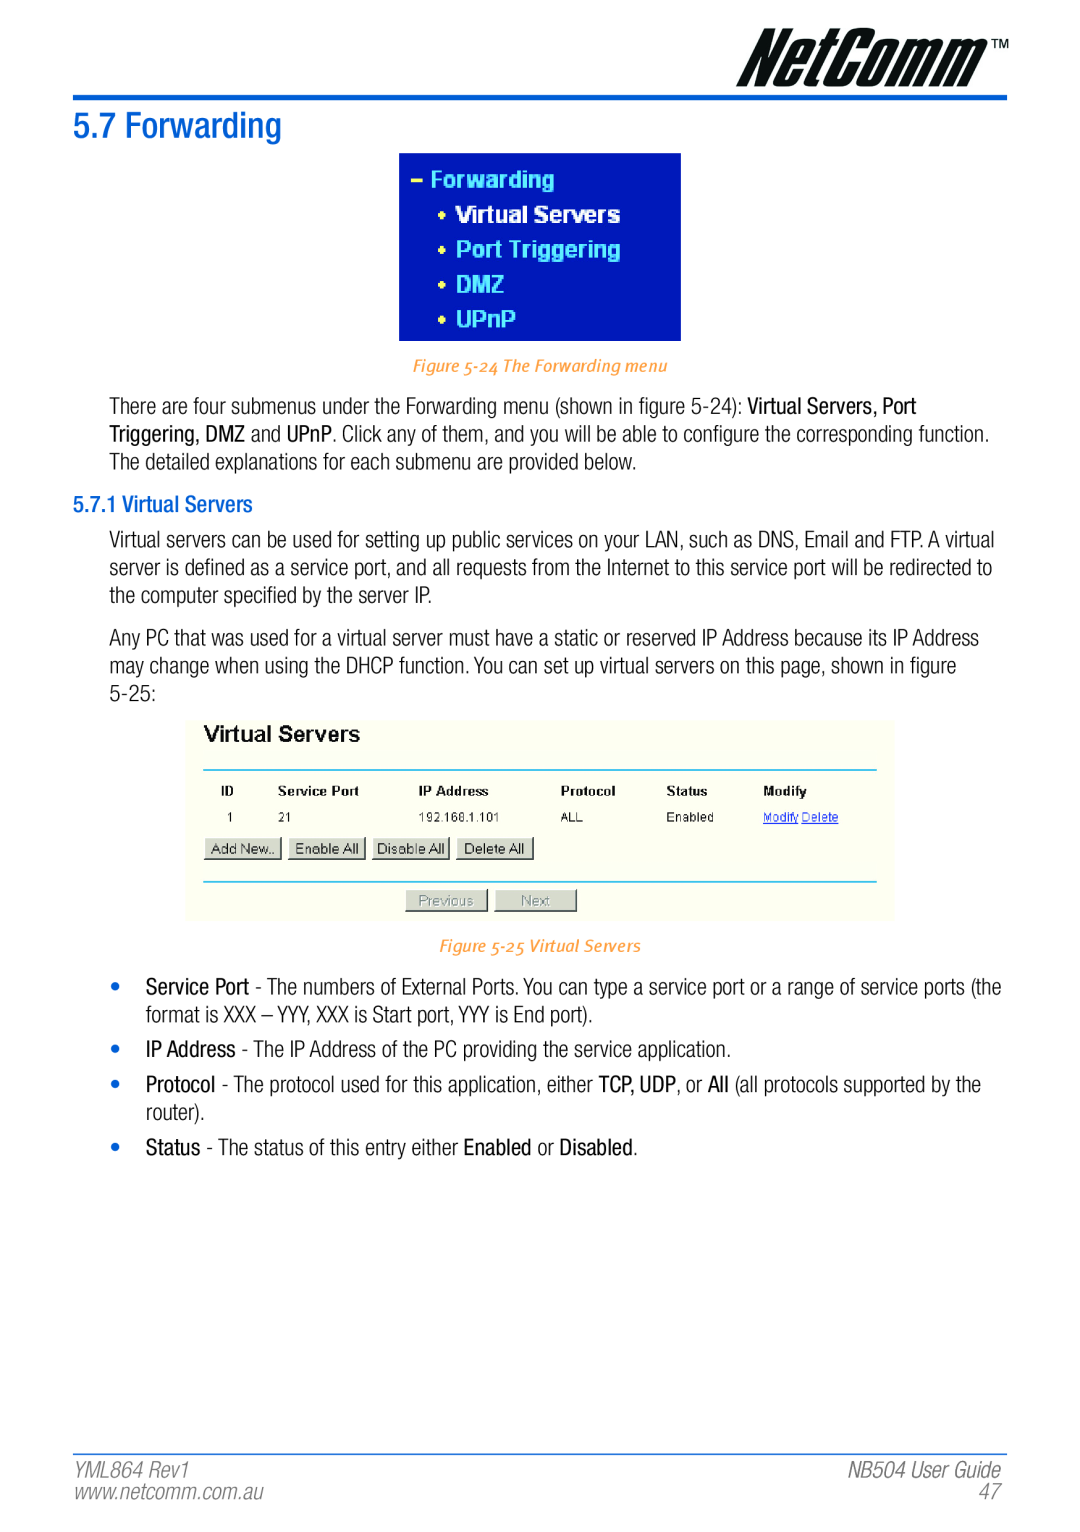 NetComm NB504 manual Forwarding, Virtual Servers, YML864 Rev1 